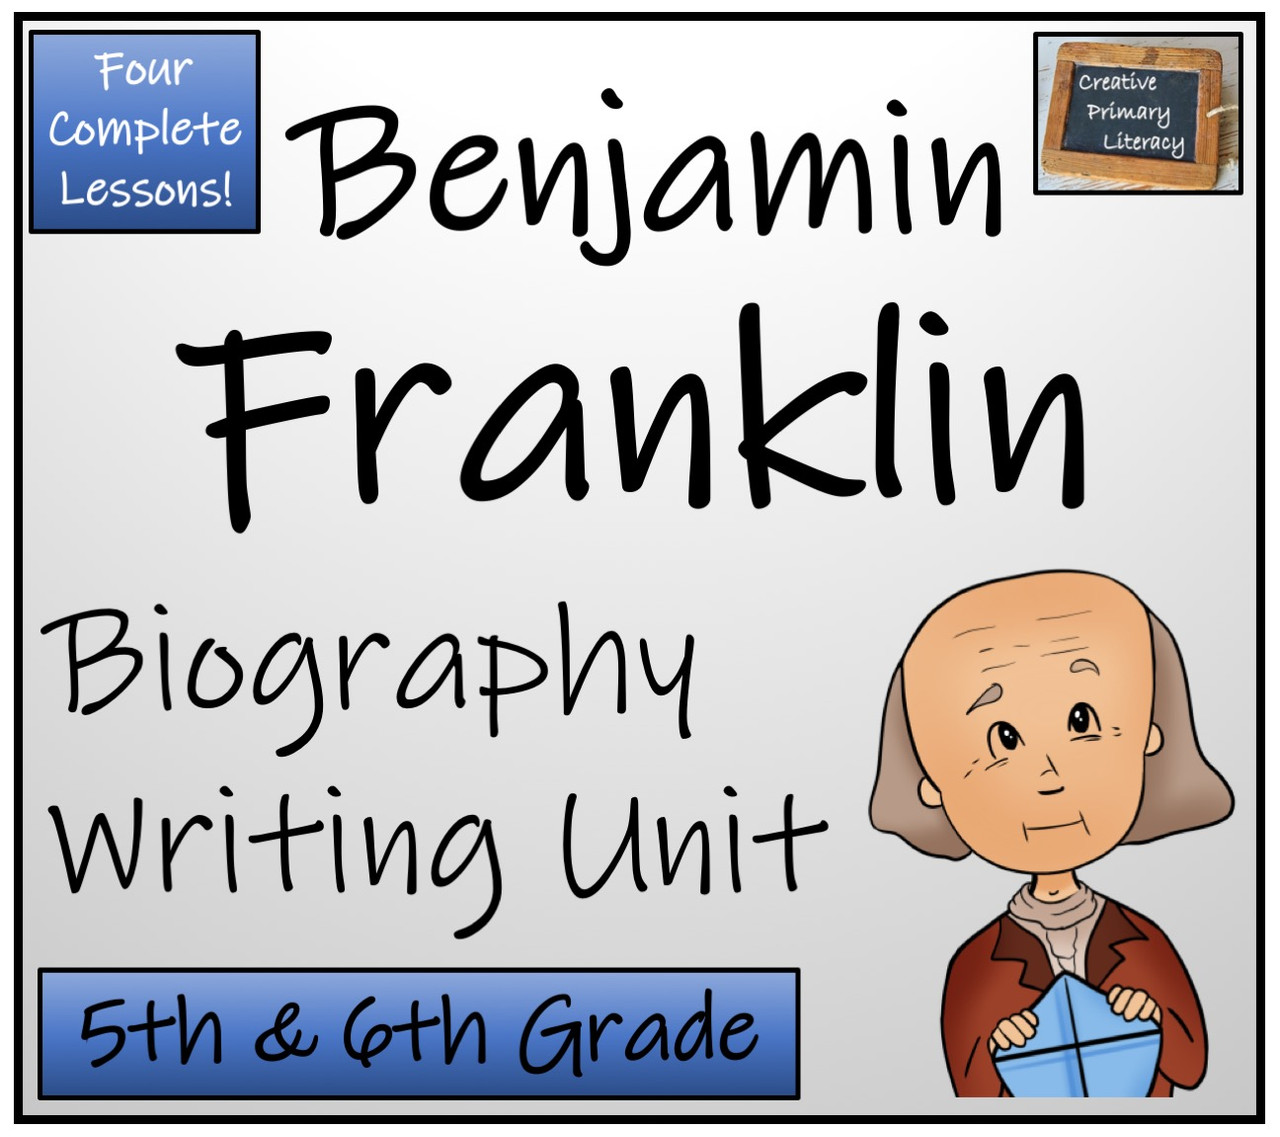 Benjamin Franklin - 5th & 6th Grade Biography Writing Activity